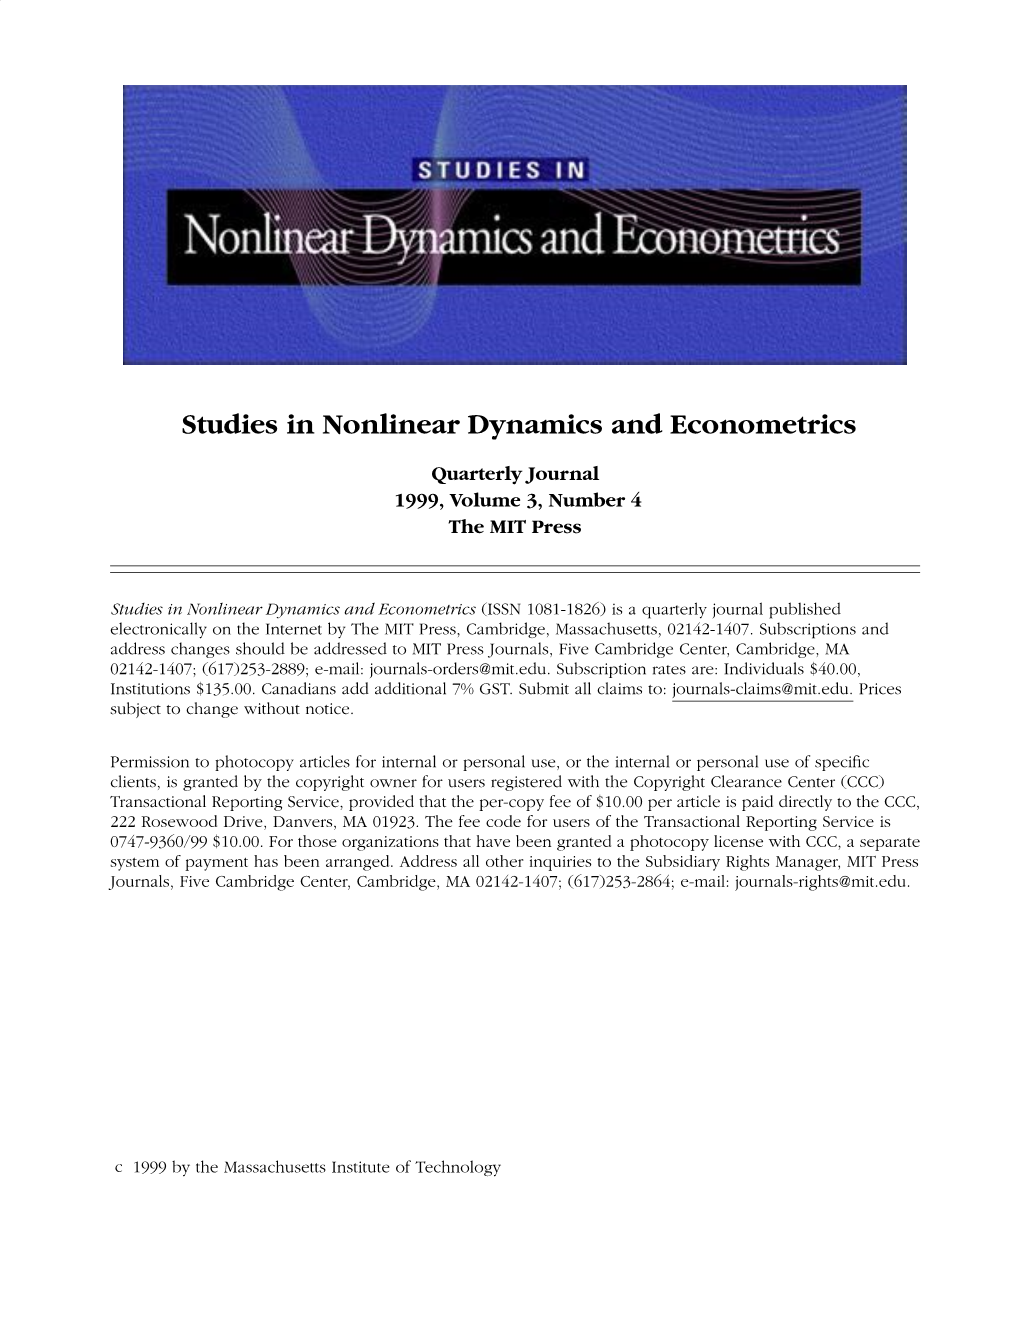 Studies in Nonlinear Dynamics and Econometrics